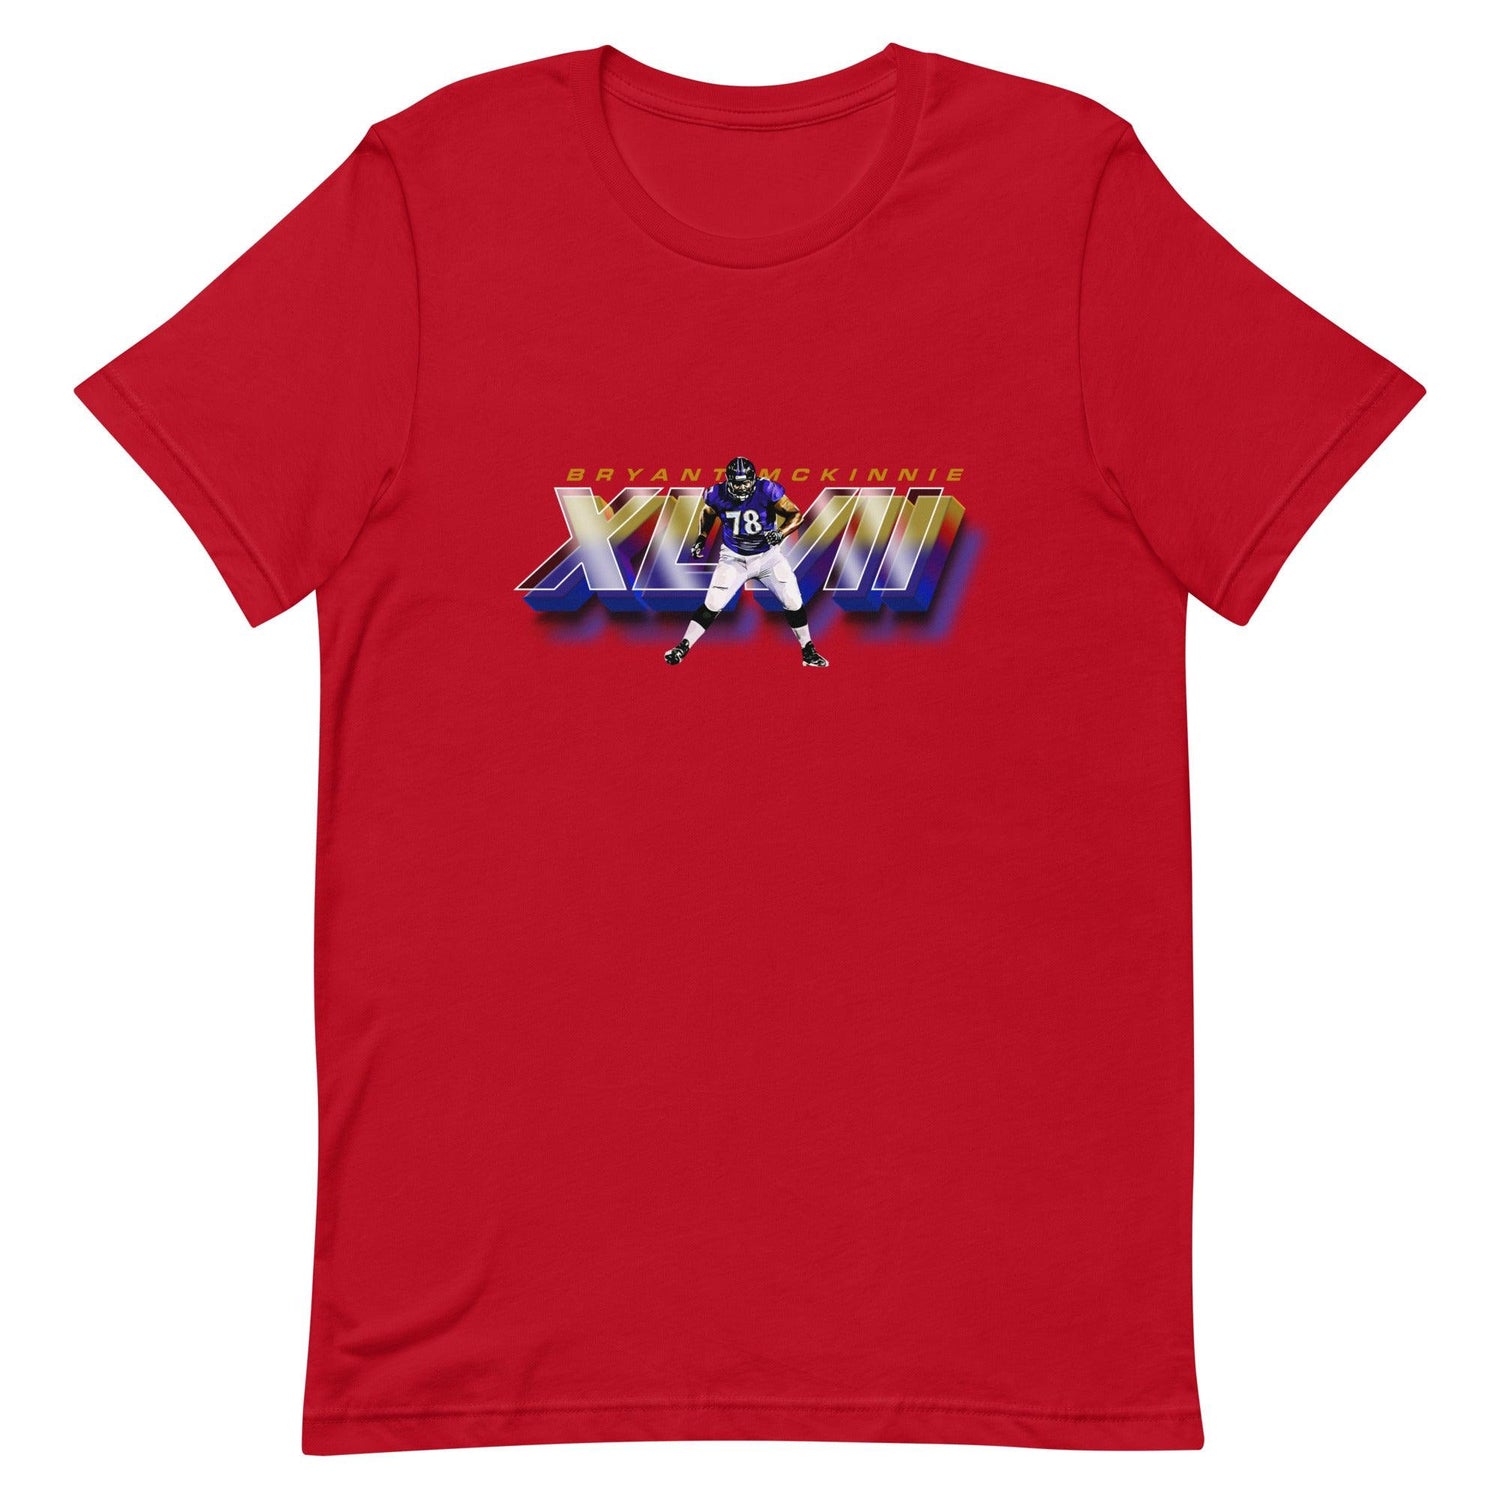 Bryant McKinnie "XLVII" t-shirt - Fan Arch